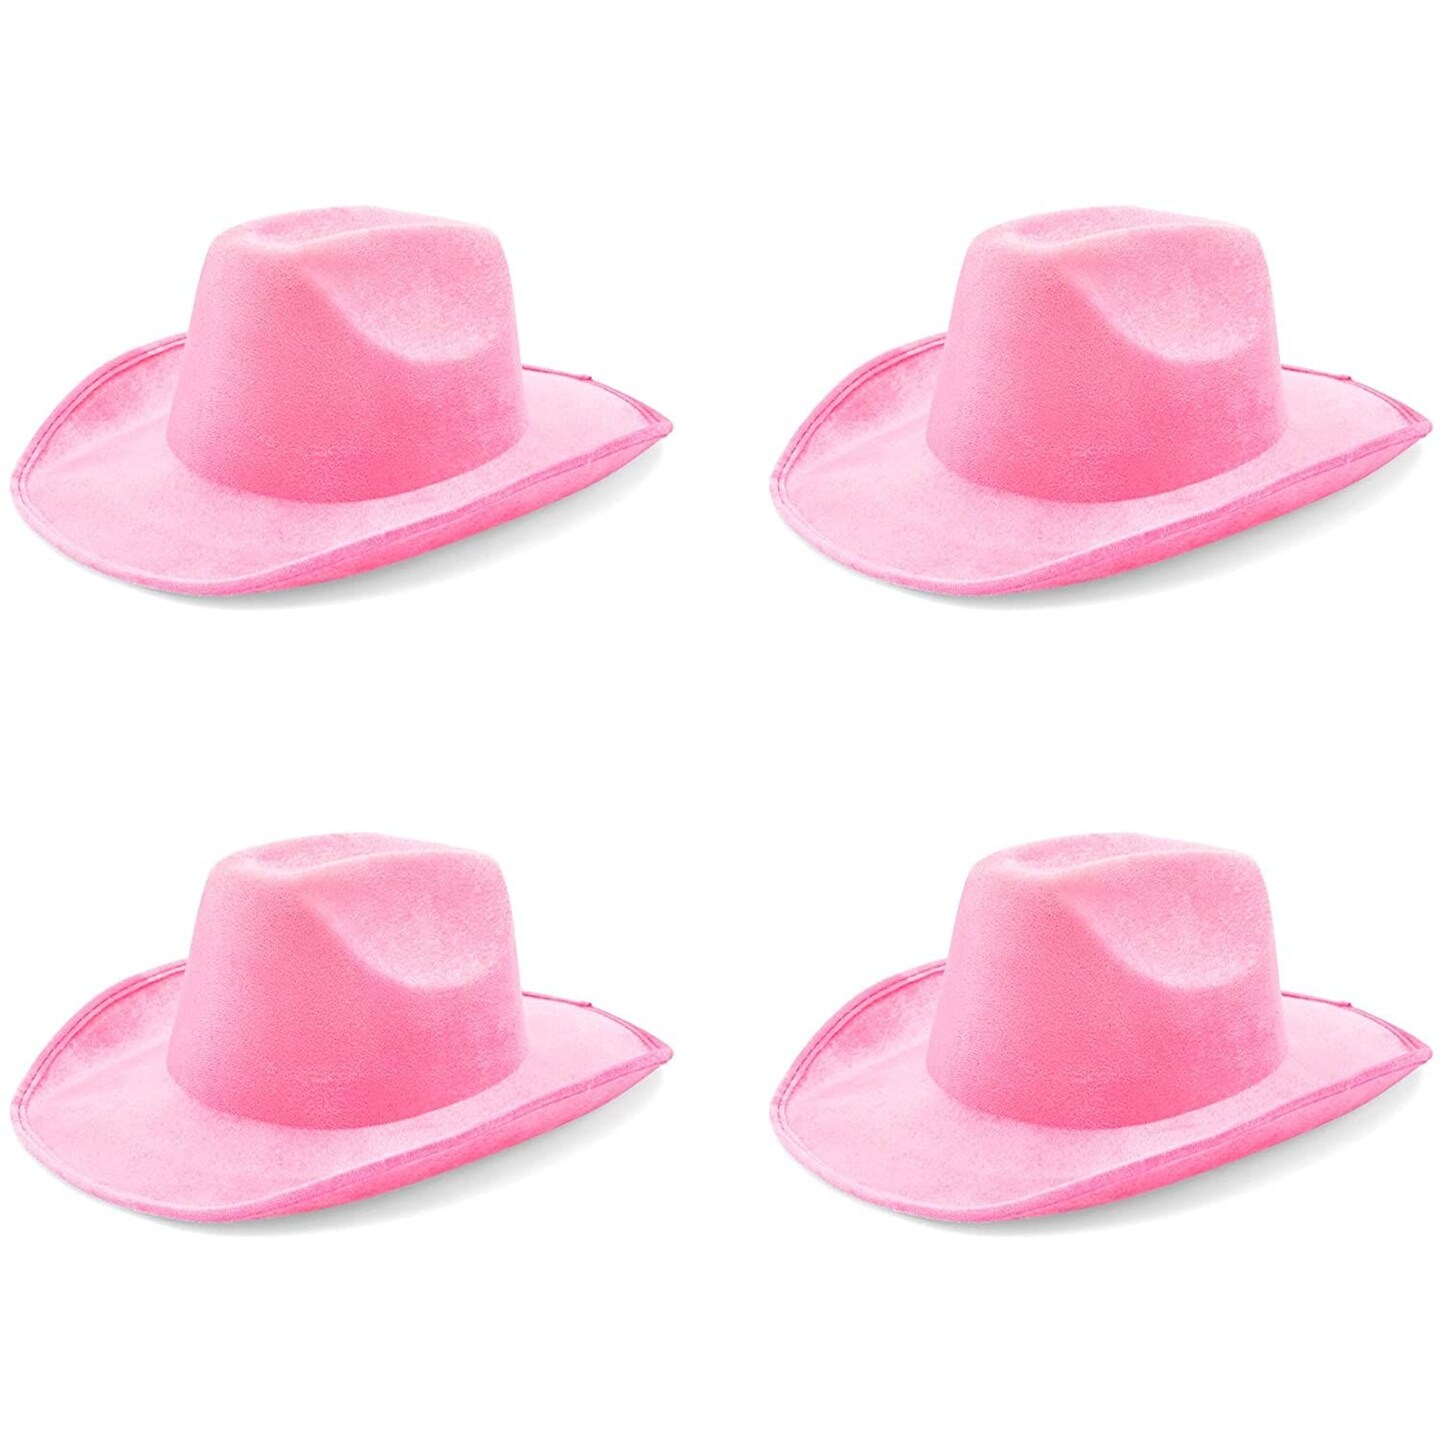 4-Pack Pink Felt Cowboy Hats - Bulk Pack of Cowboy Hats for Women, Girls, Men, Birthday, Party, Bachelorette (Adult Size)